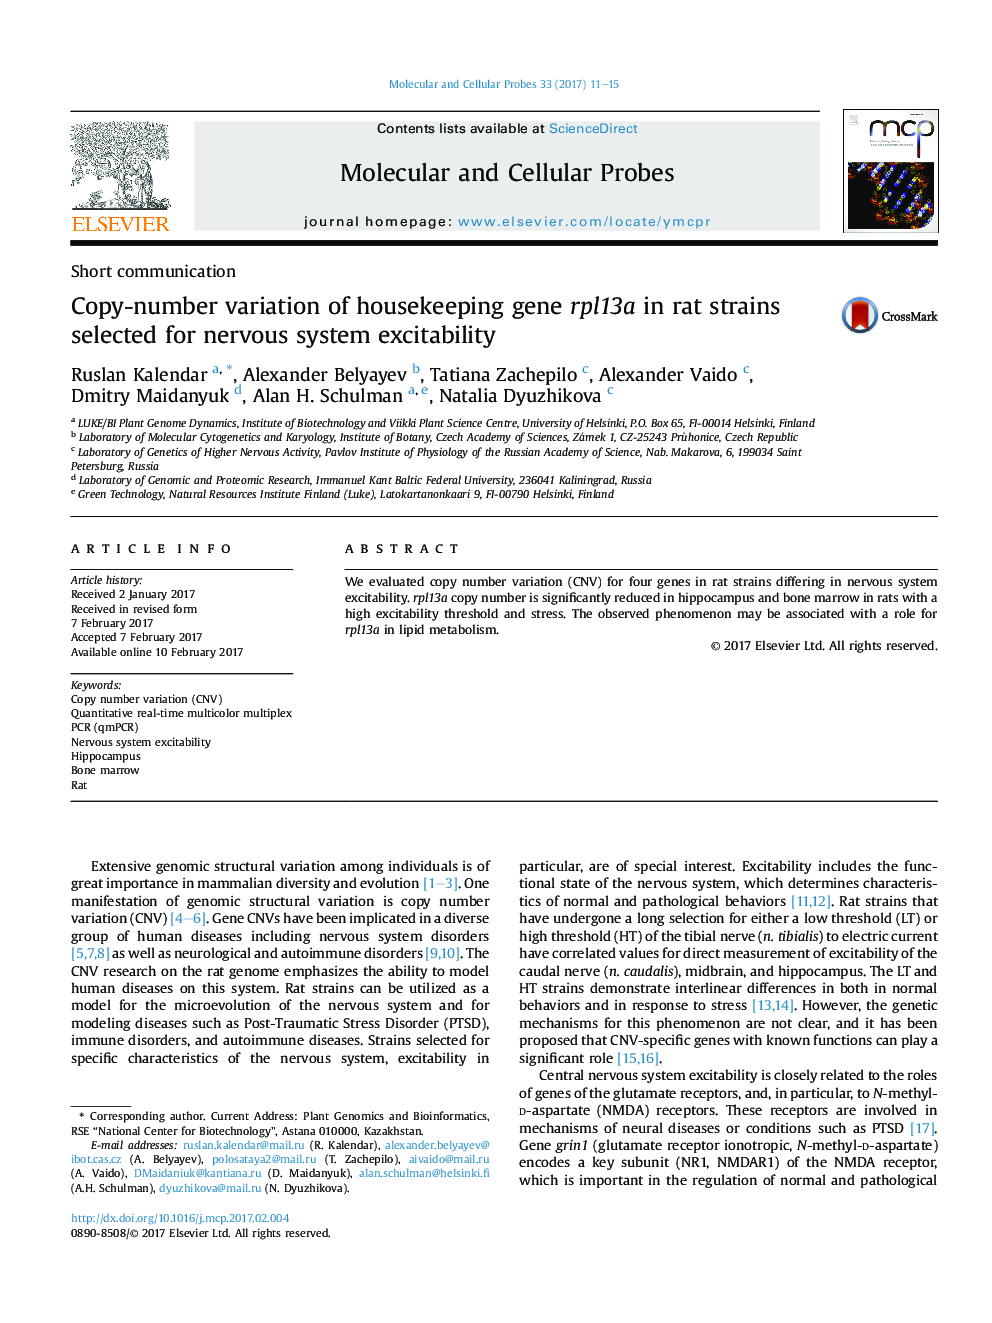 Short communicationCopy-number variation of housekeeping gene rpl13a in rat strains selected for nervous system excitability